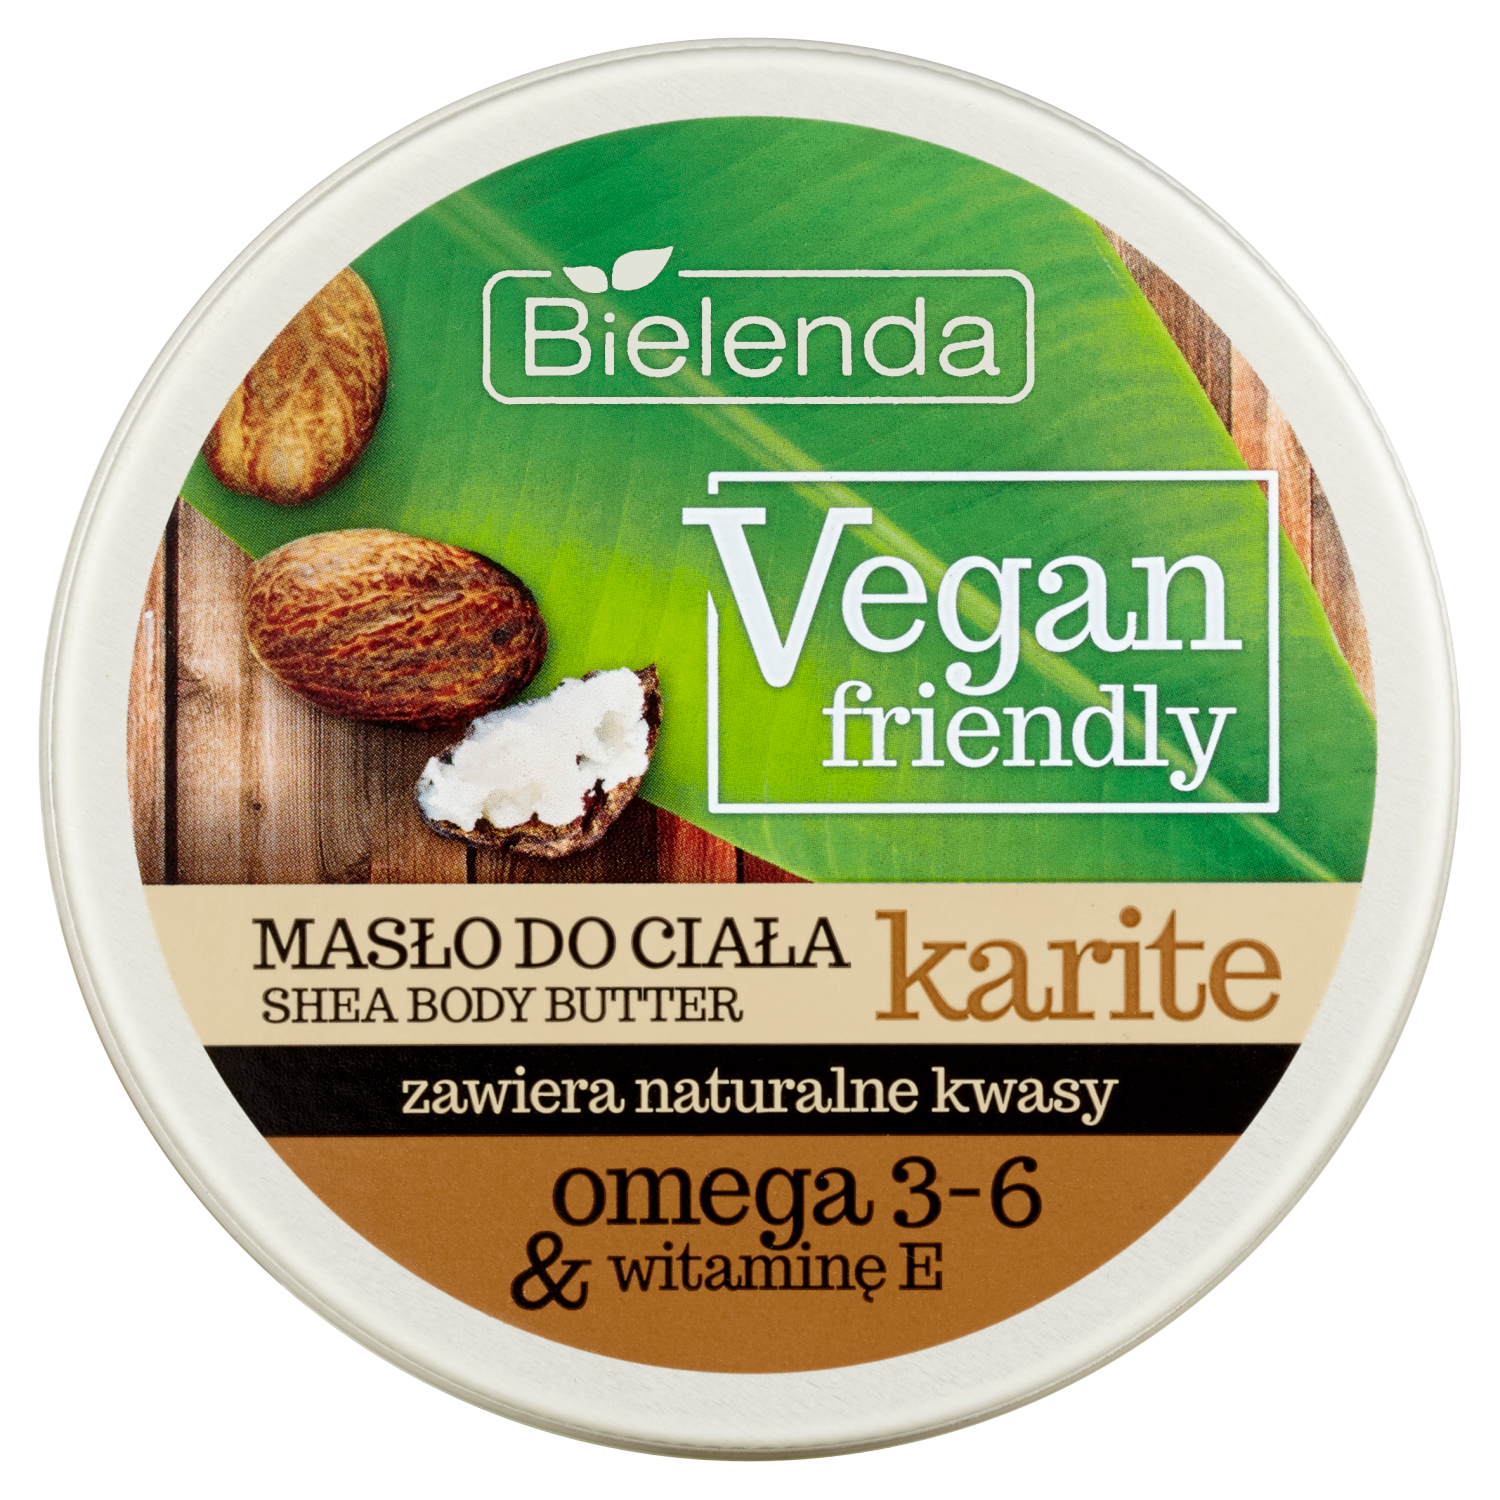 Bielenda Vegan Friendly сливочное масло для тела с натуральным маслом ши, 250 мл bielenda масло для тела vegan friendly авокадо 250 мл